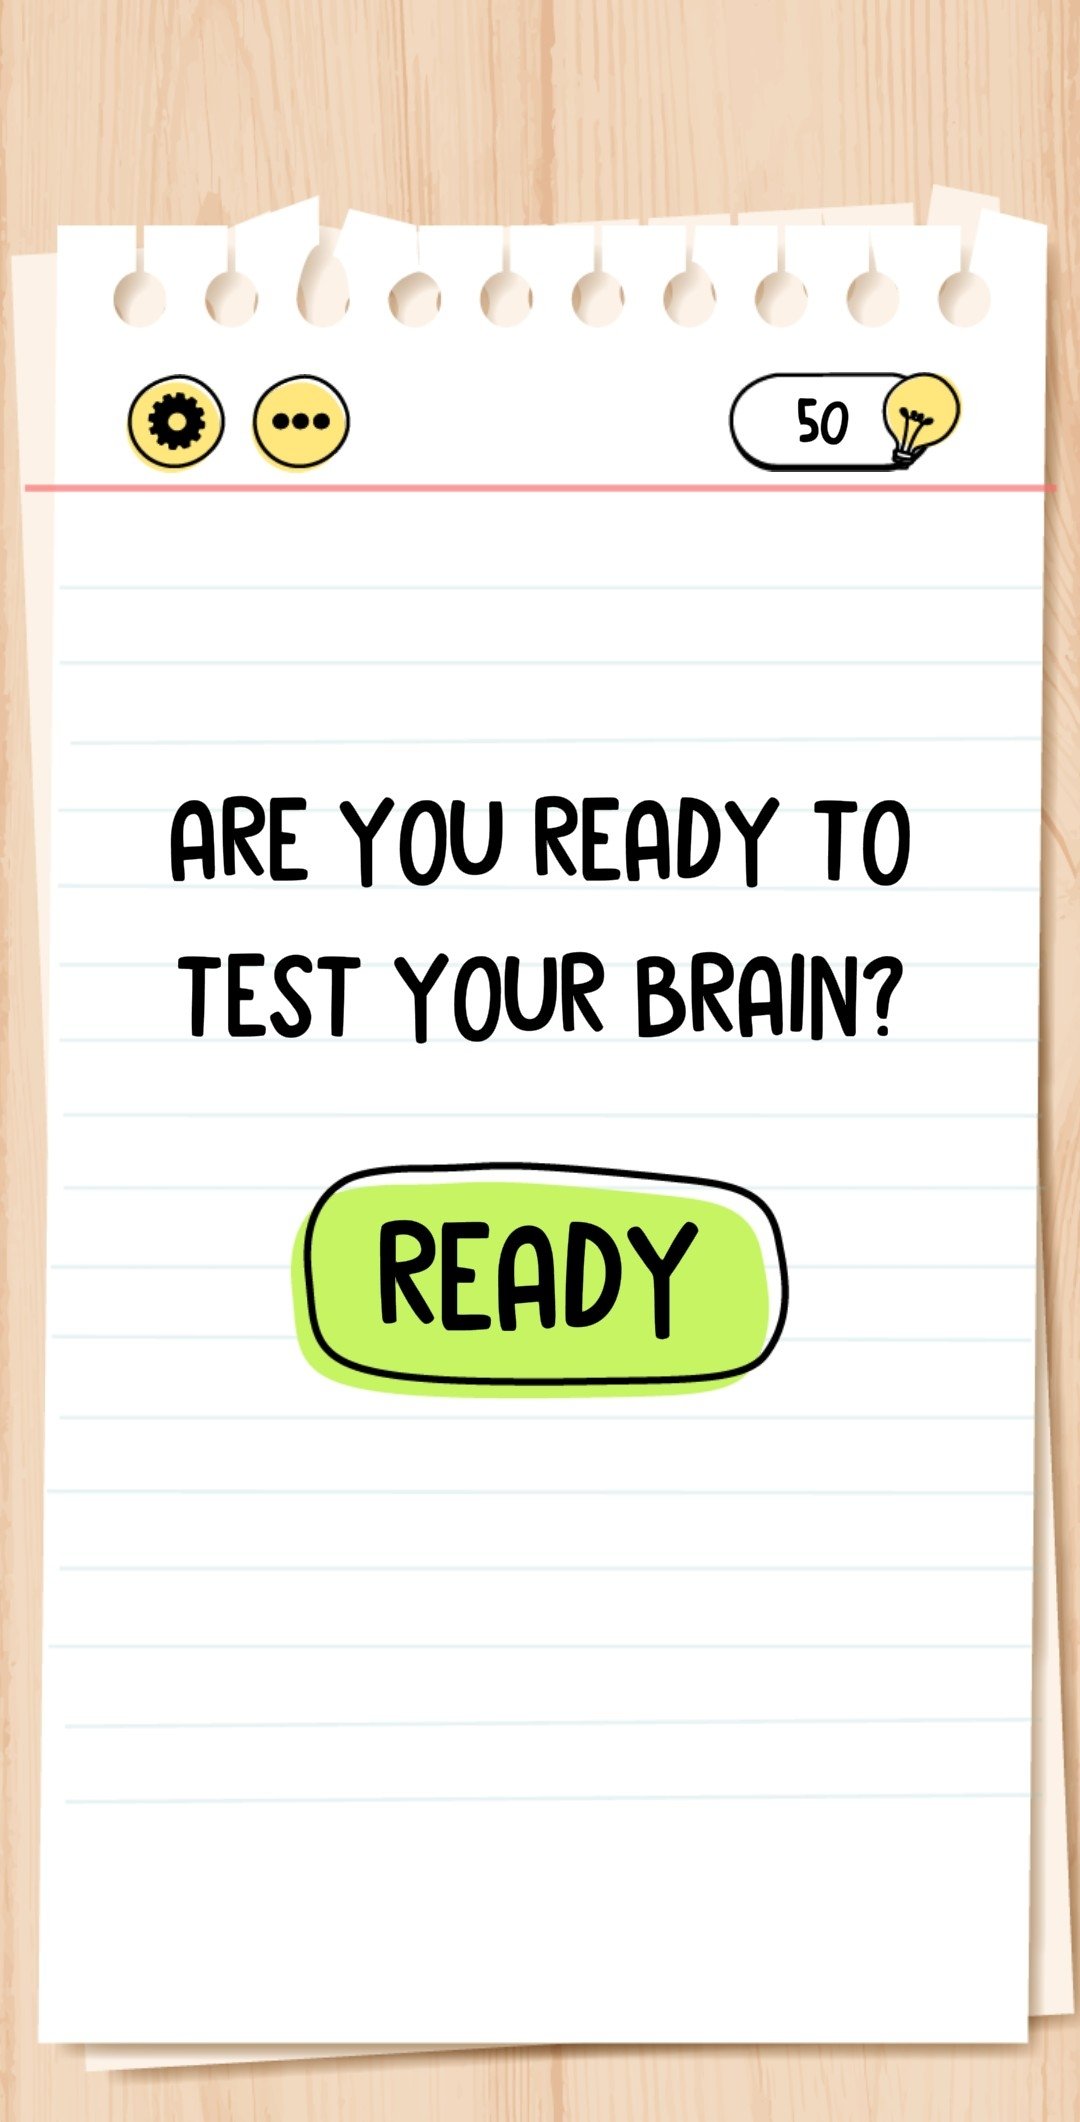 brain test 2 mod apk